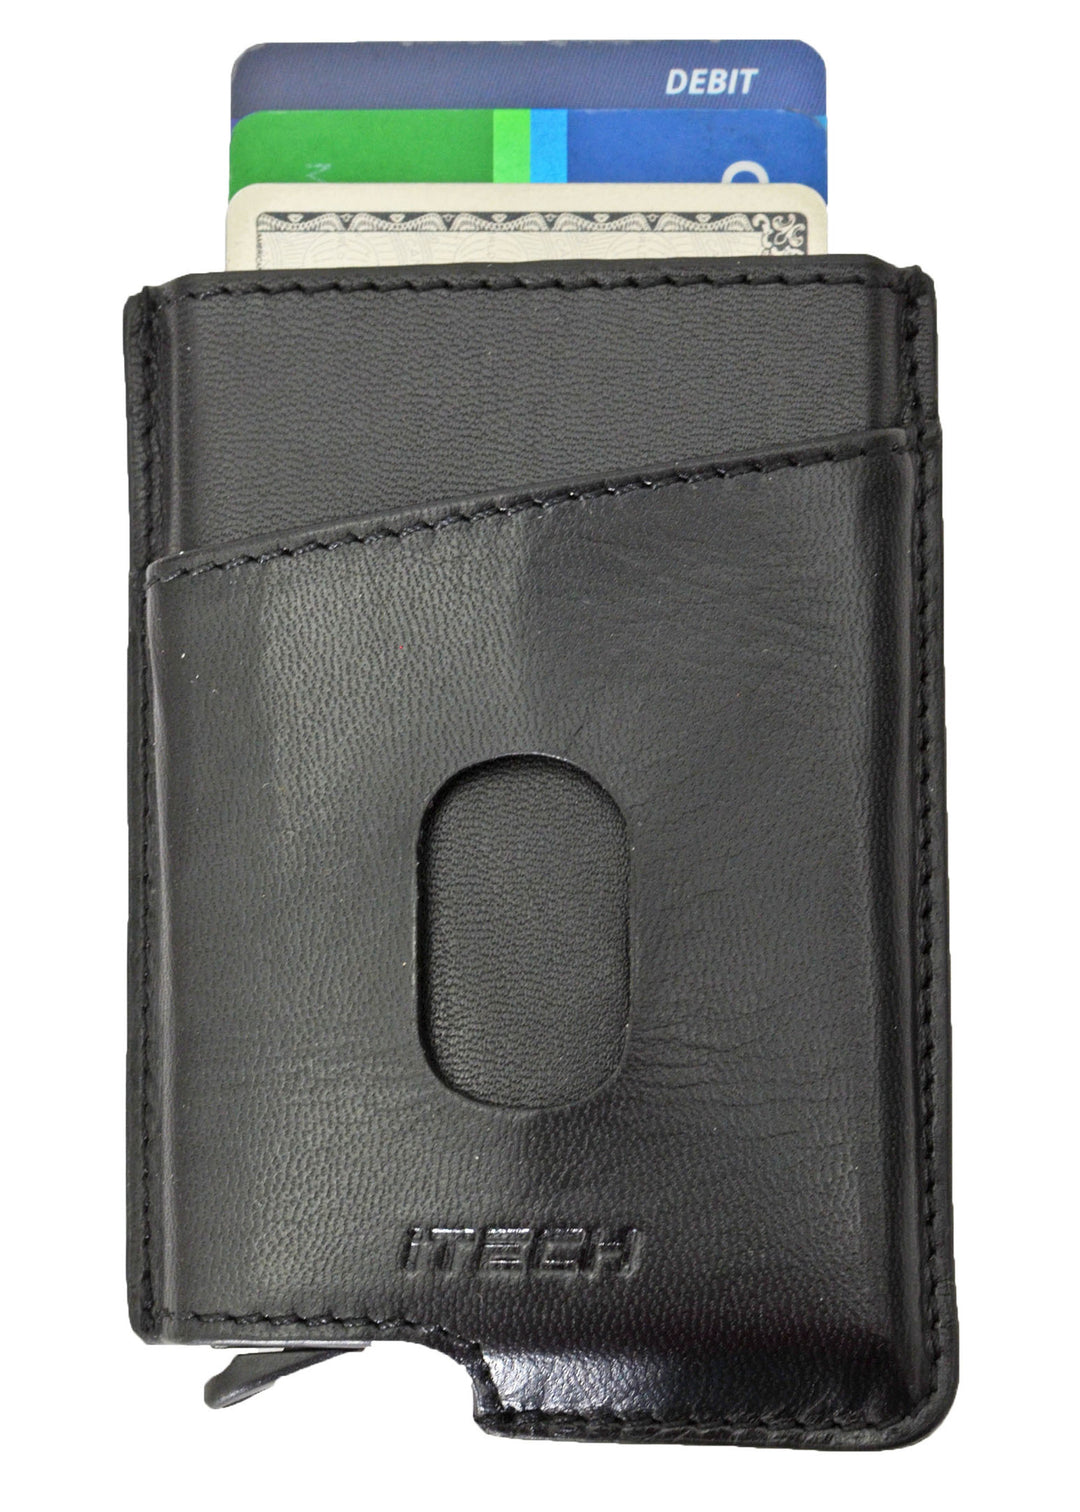 Minimalist Magnetic RFID Wallet For Phones